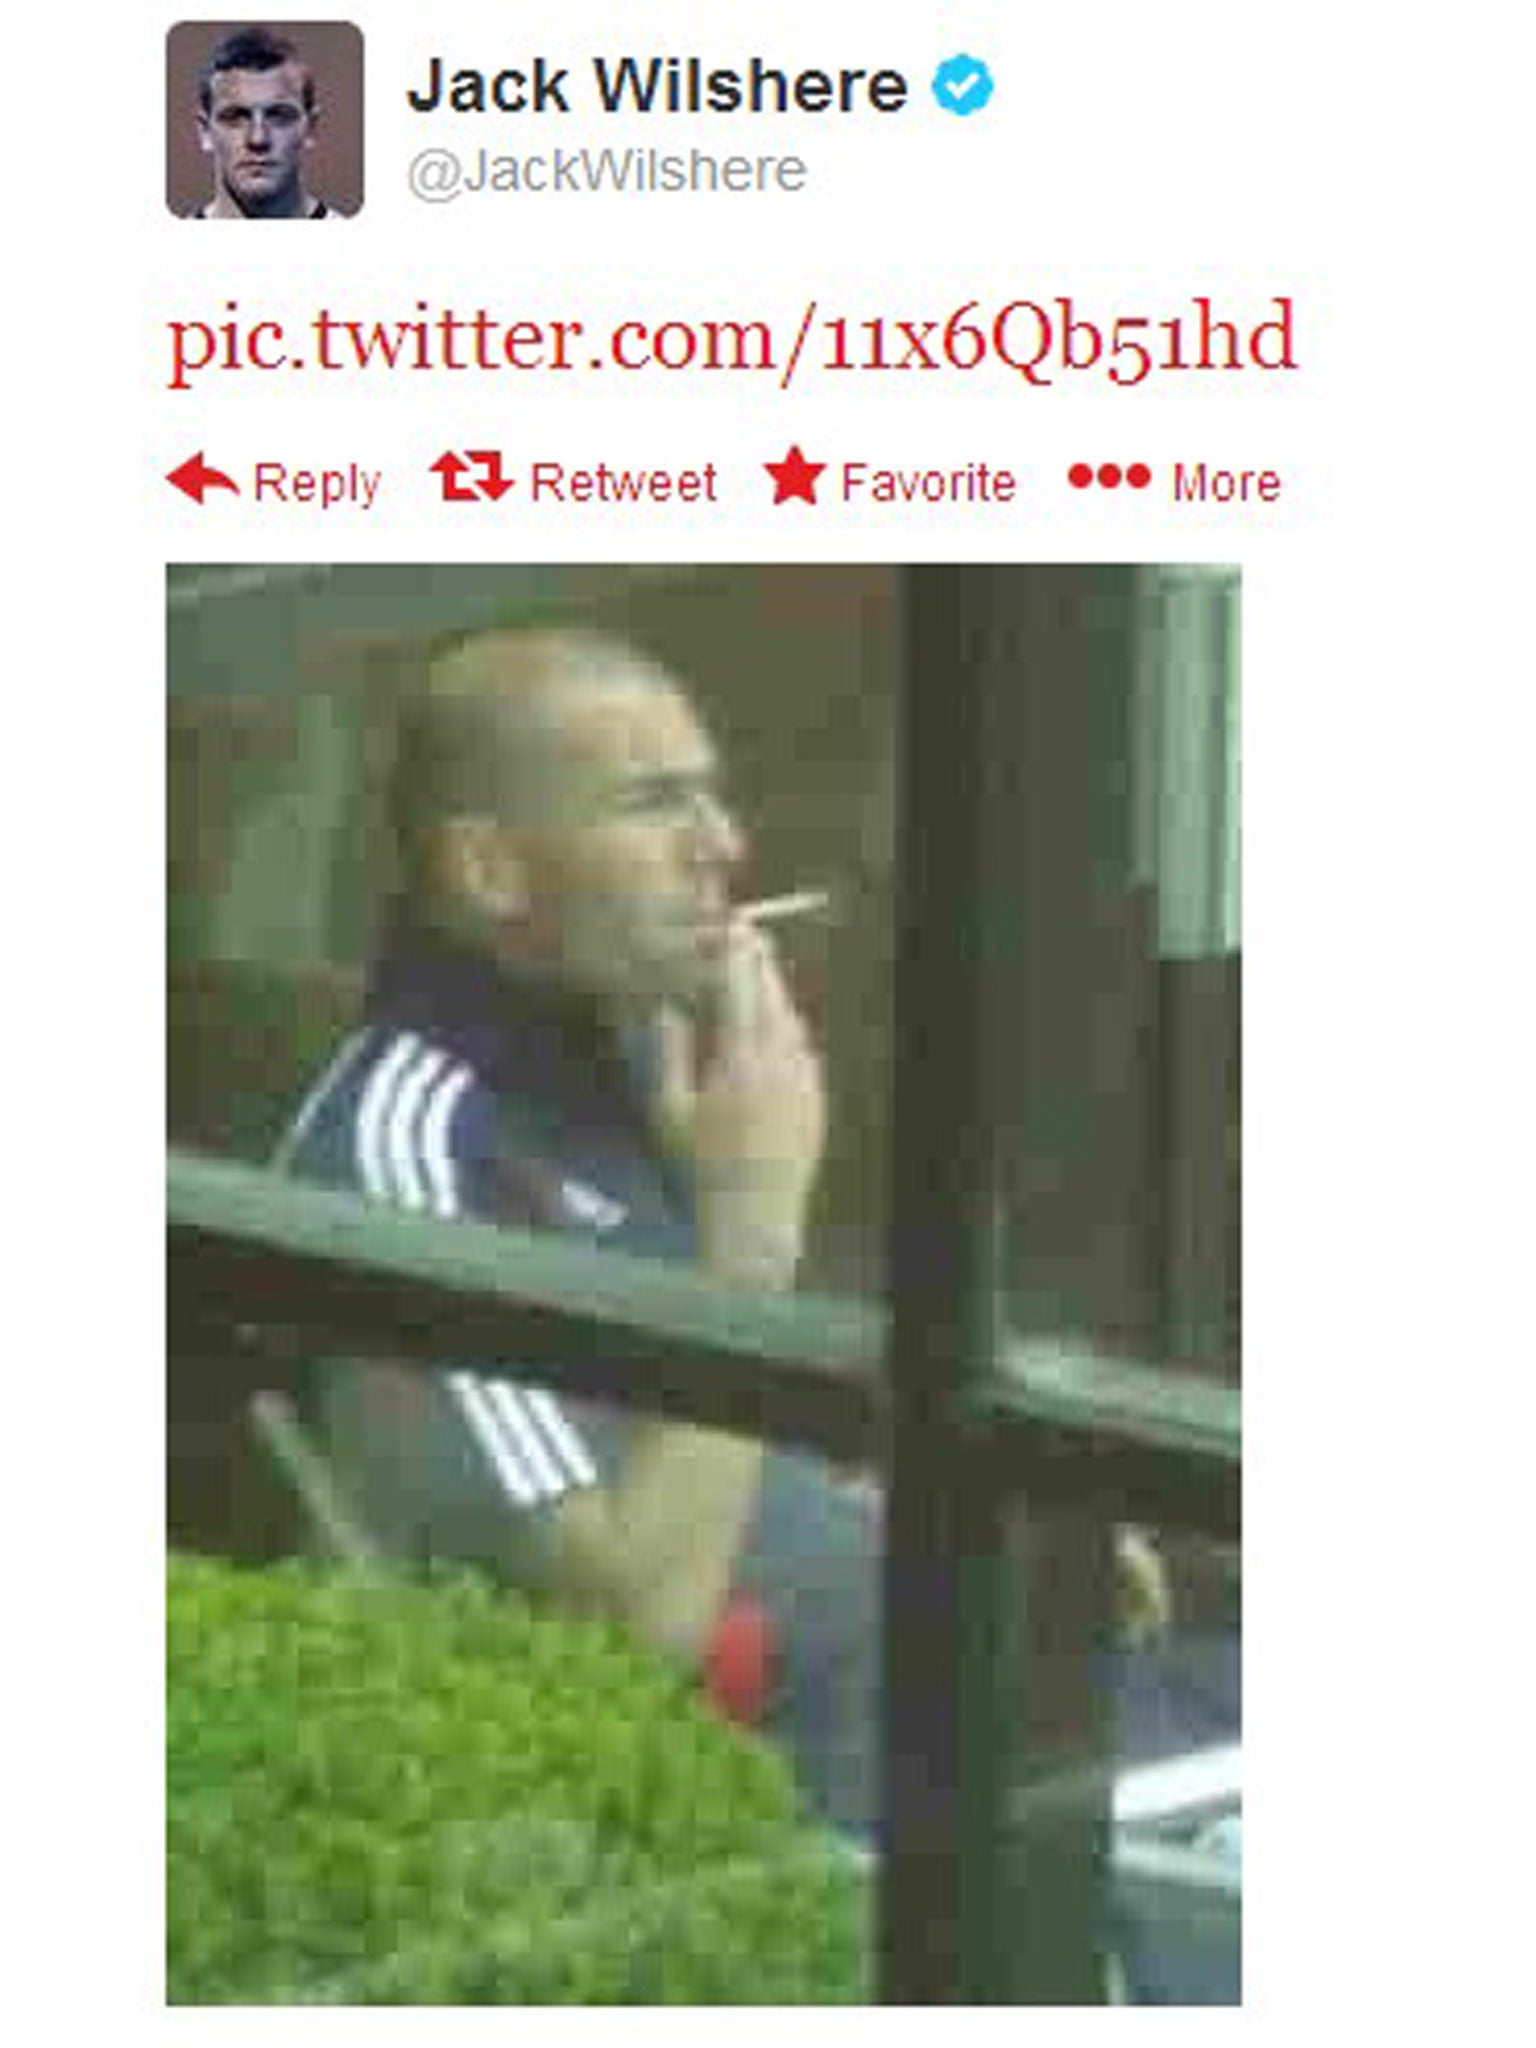 Jack Wilshere tweeted a picture of Zinedine Zidane smoking